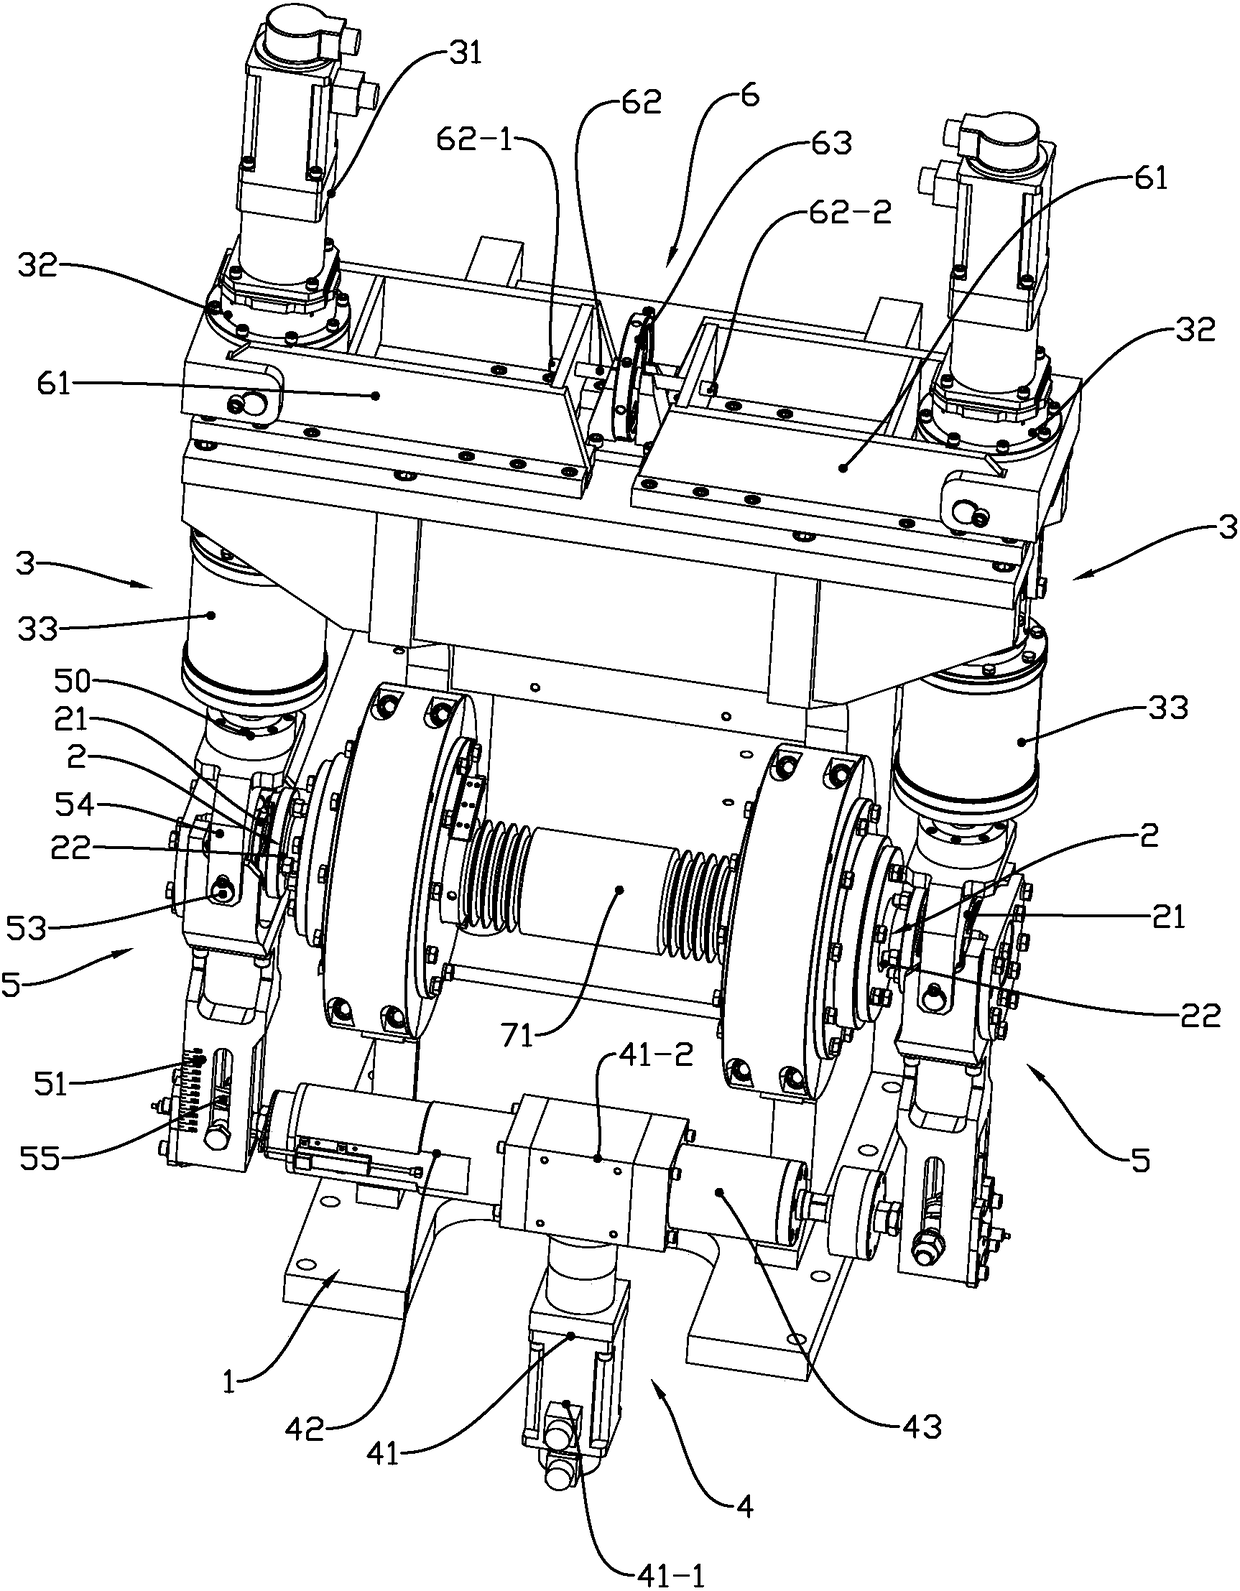 Automobile hub bearing testing machine